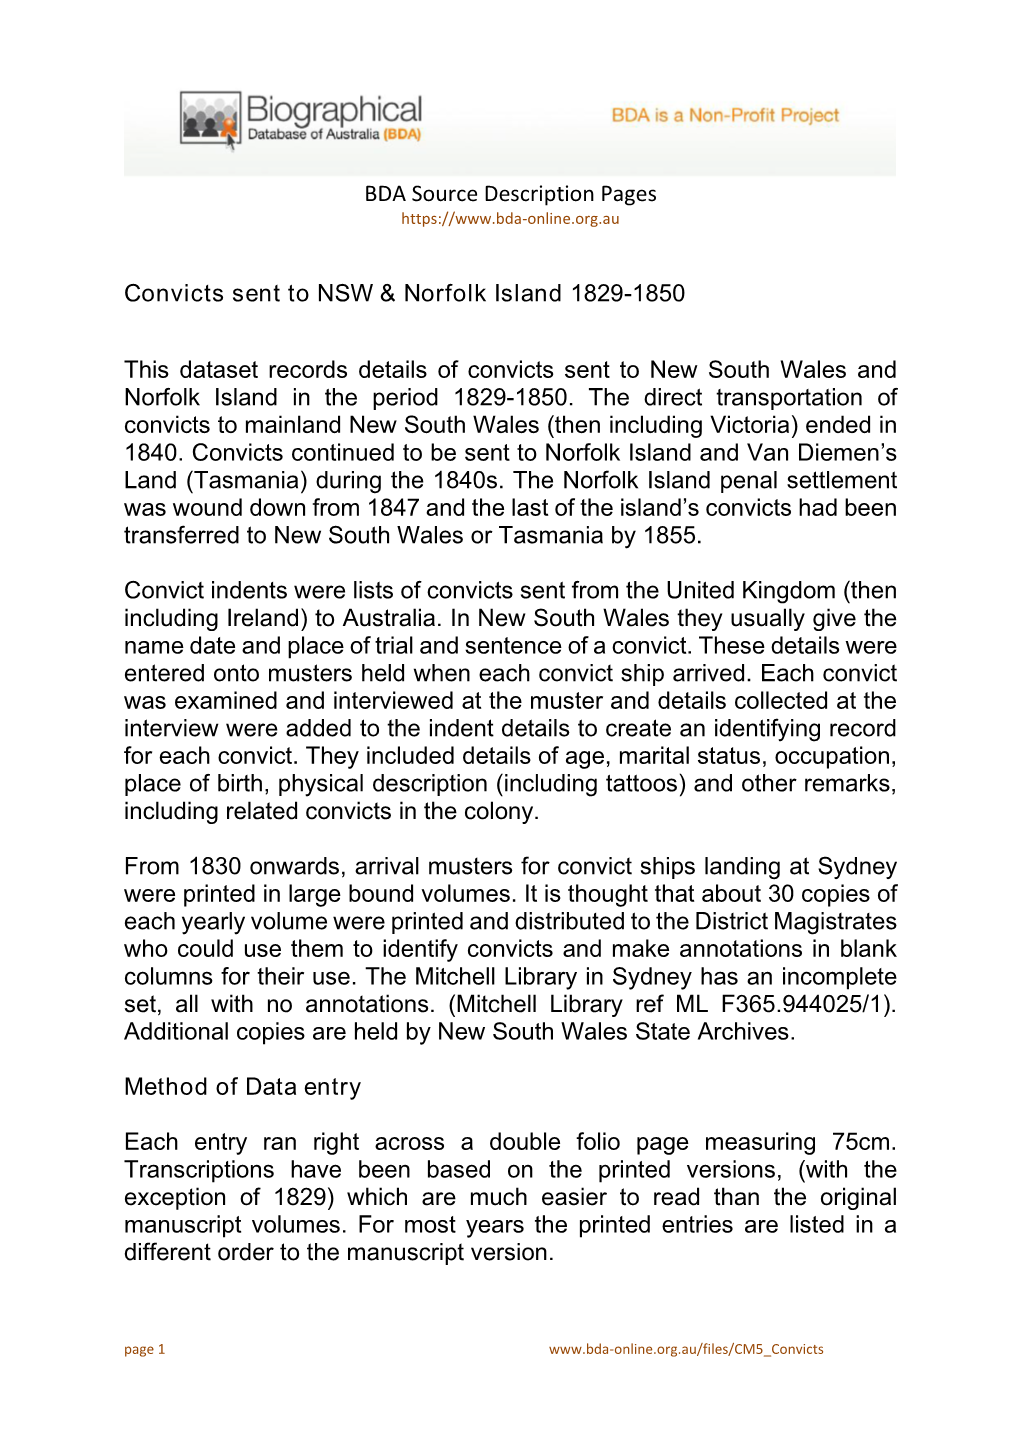 BDA Source Description Pages Convicts Sent to NSW & Norfolk